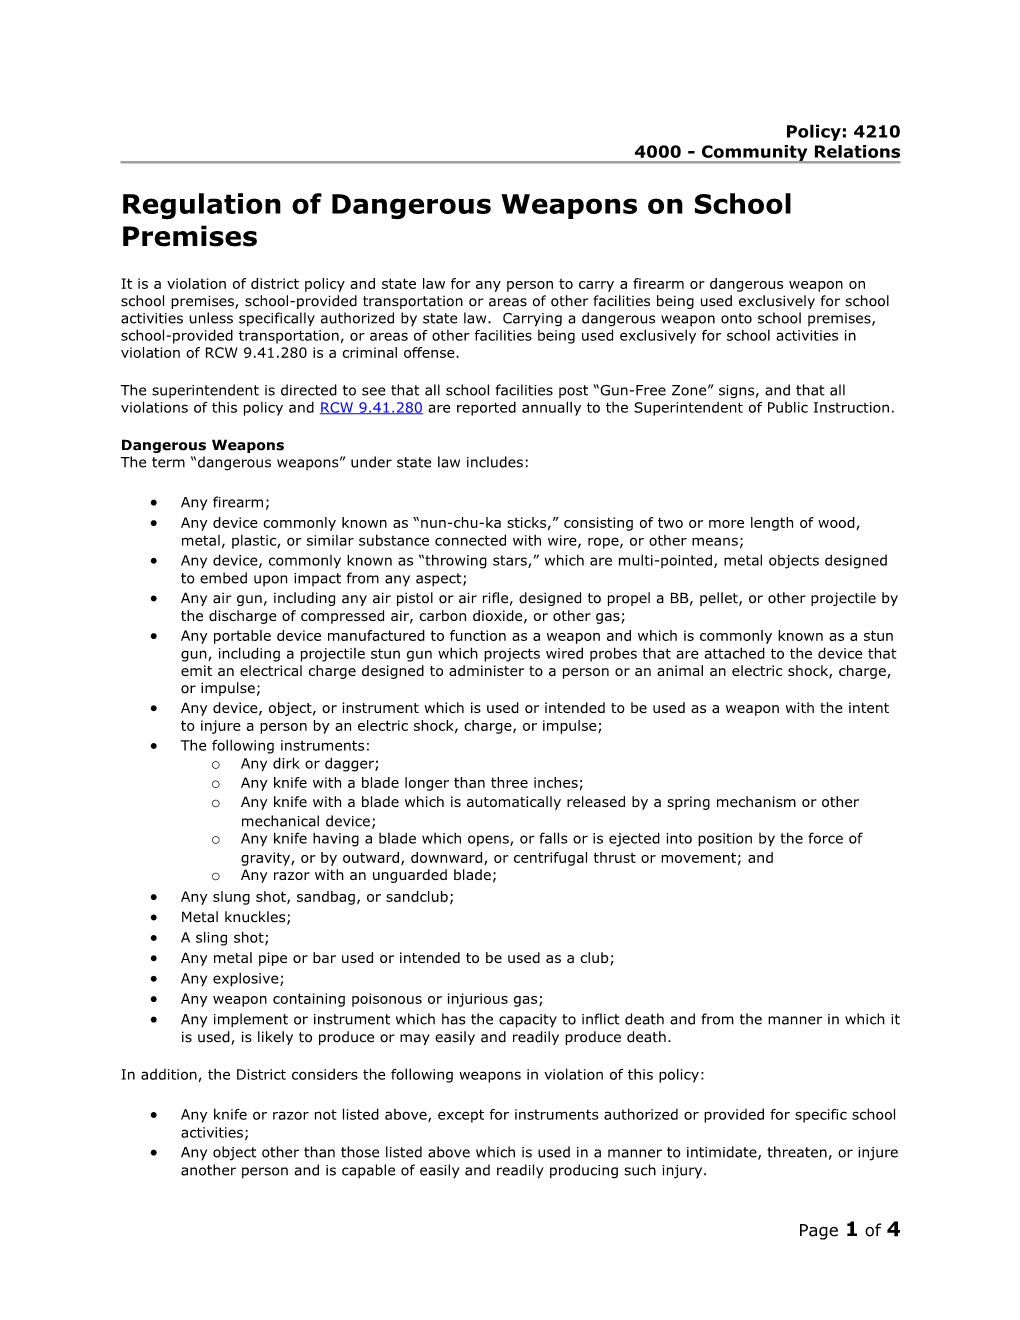 Regulation of Dangerous Weapons on School Premises